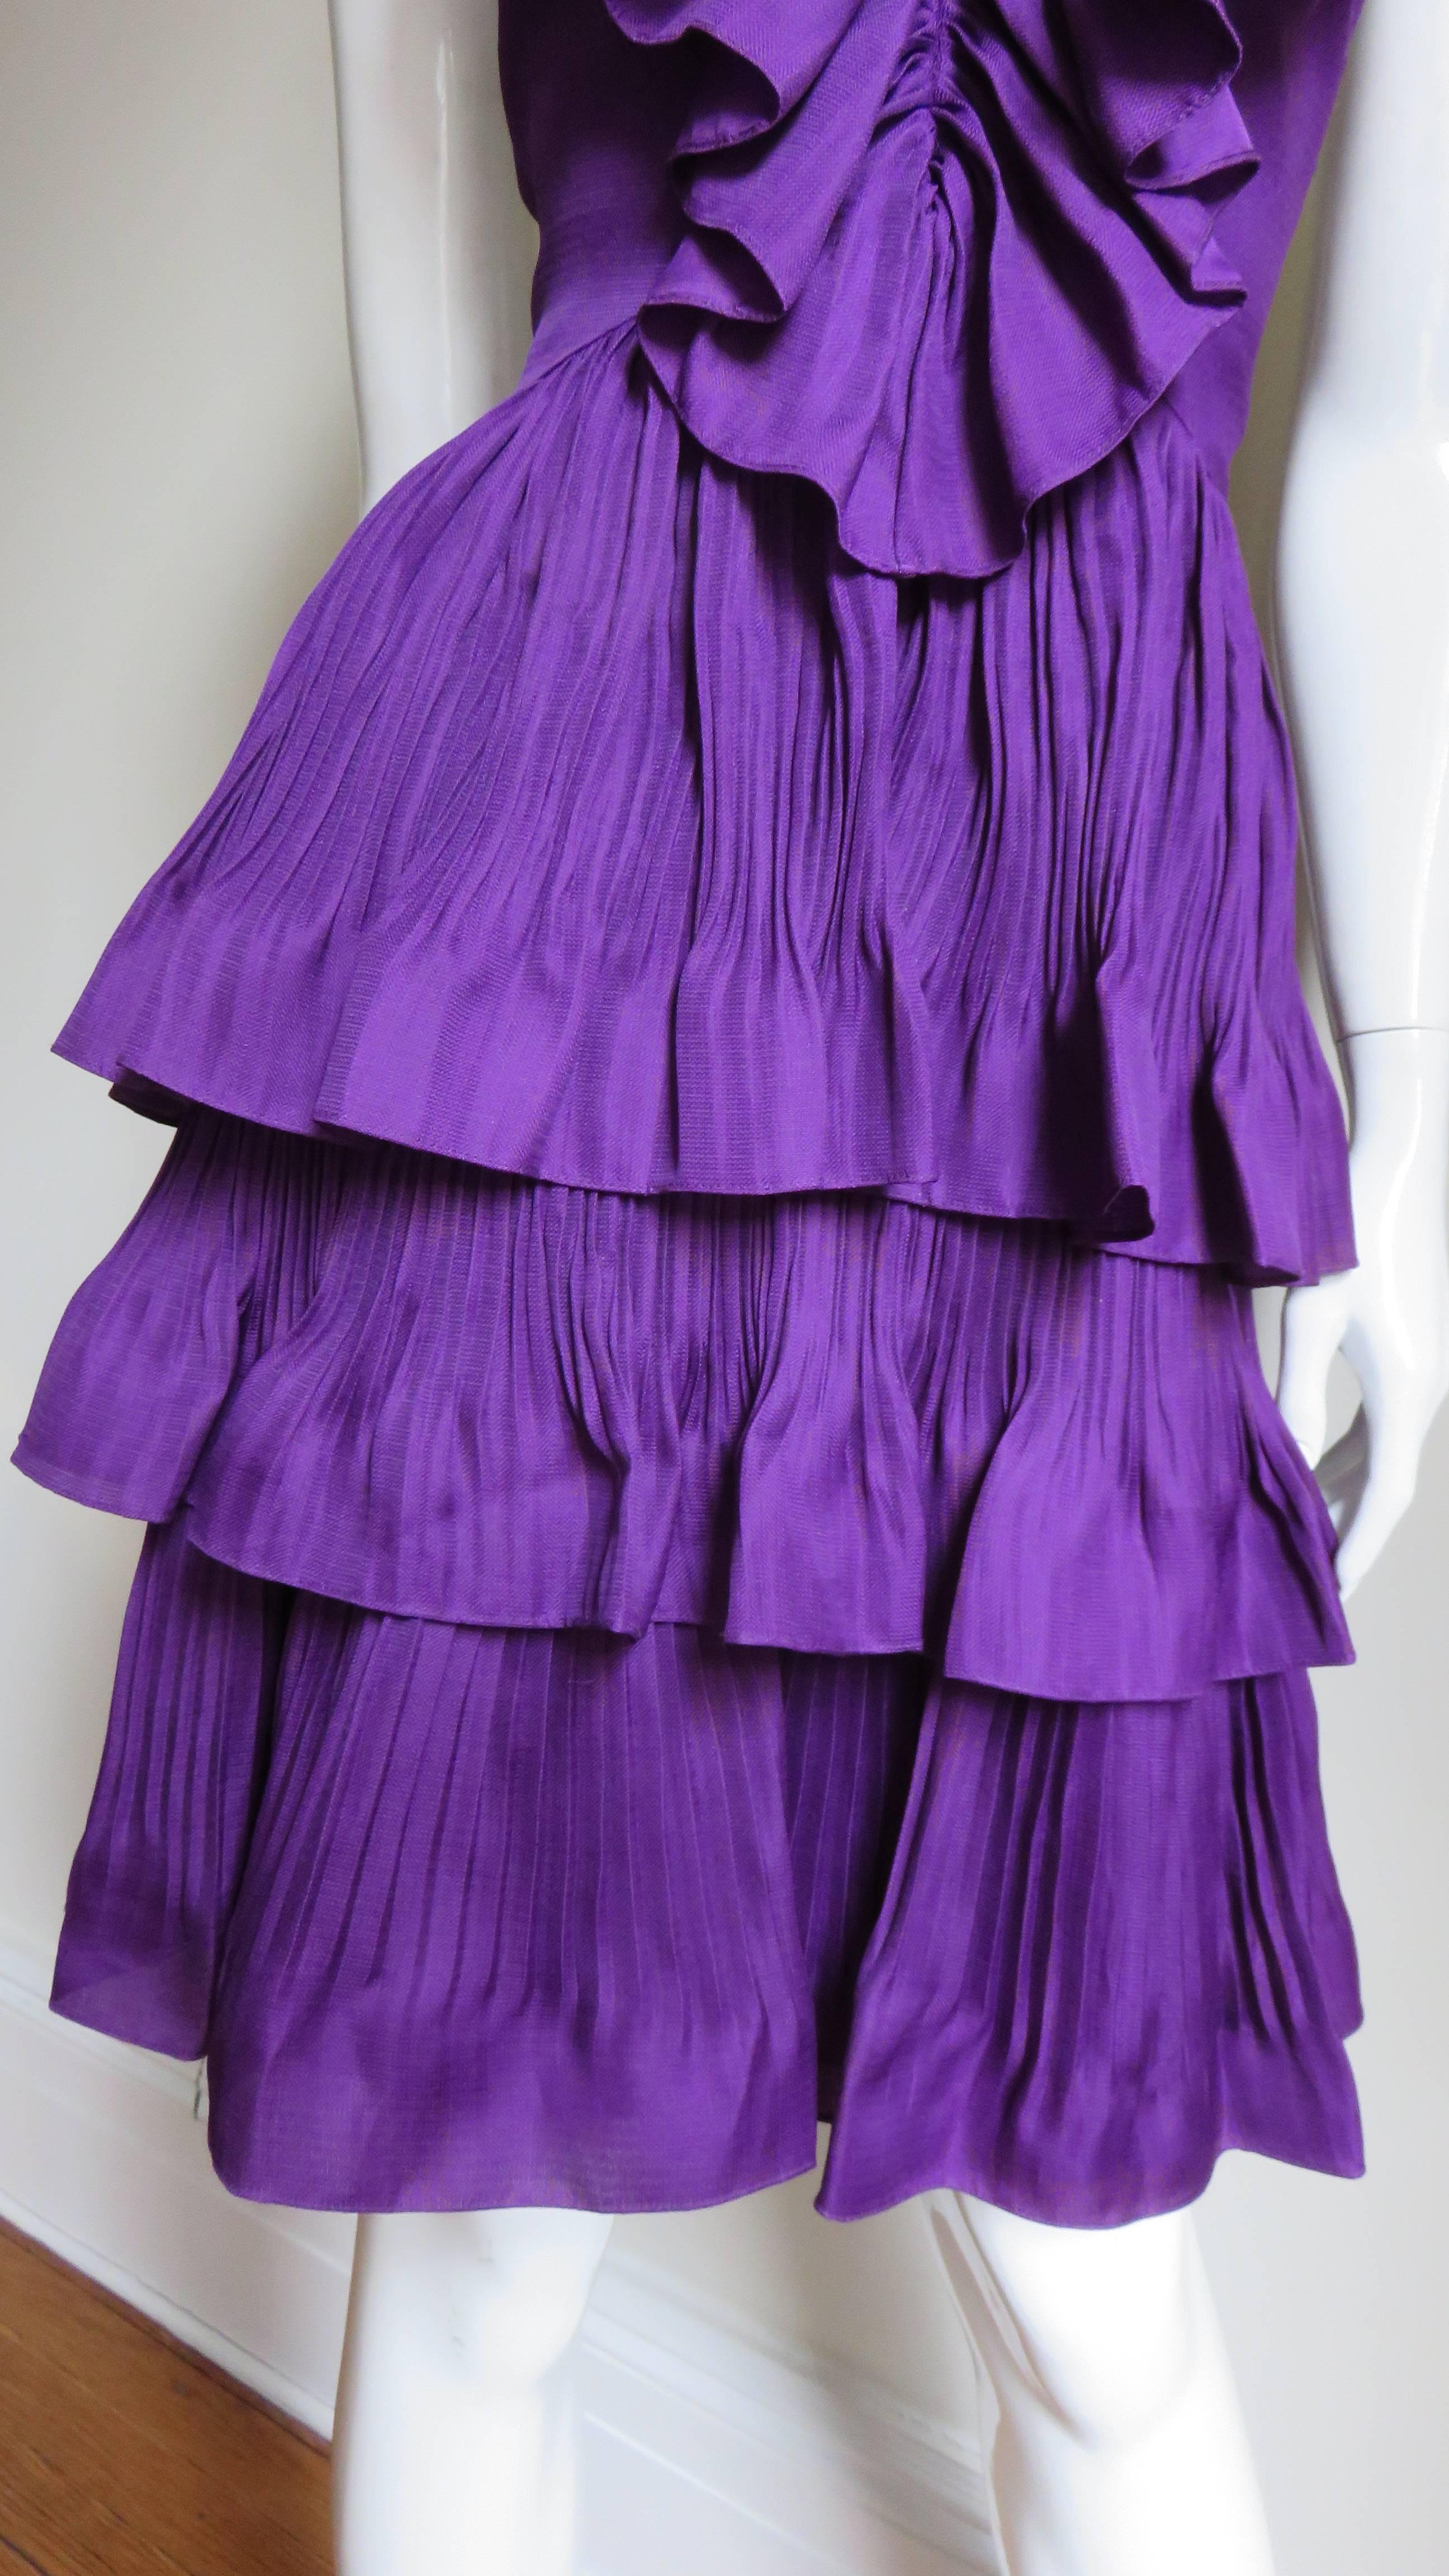 Women's John Galliano for Christian Dior S/S 2009 Silk Halter Dress For Sale